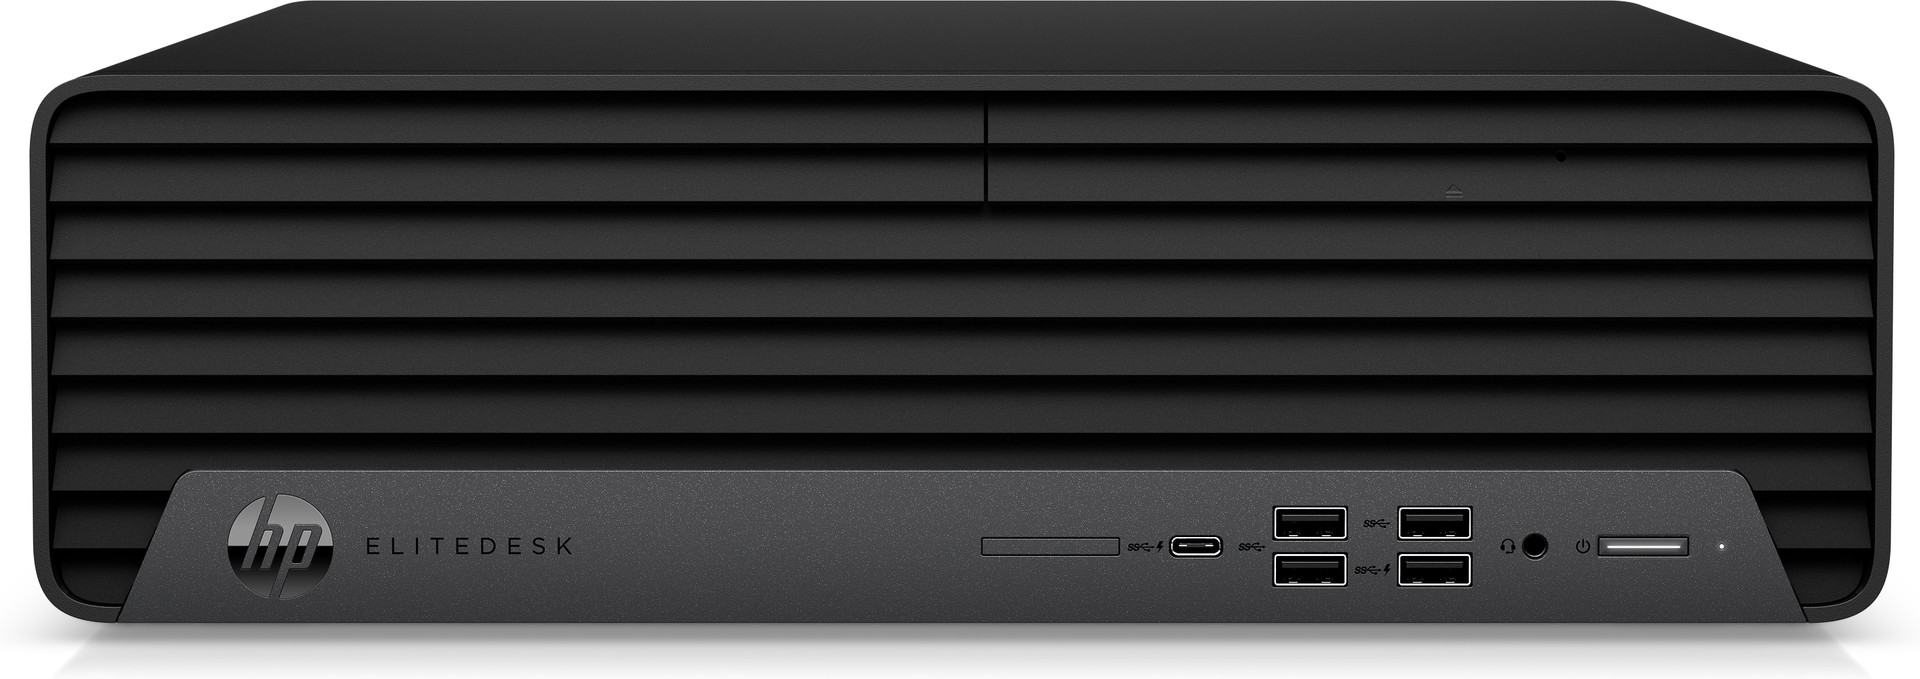 PC HP EliteDesk 800G6 SFF i7-10700, 16GB, 512GB SSD, W10P6 64bit, 3-3-3 Wty